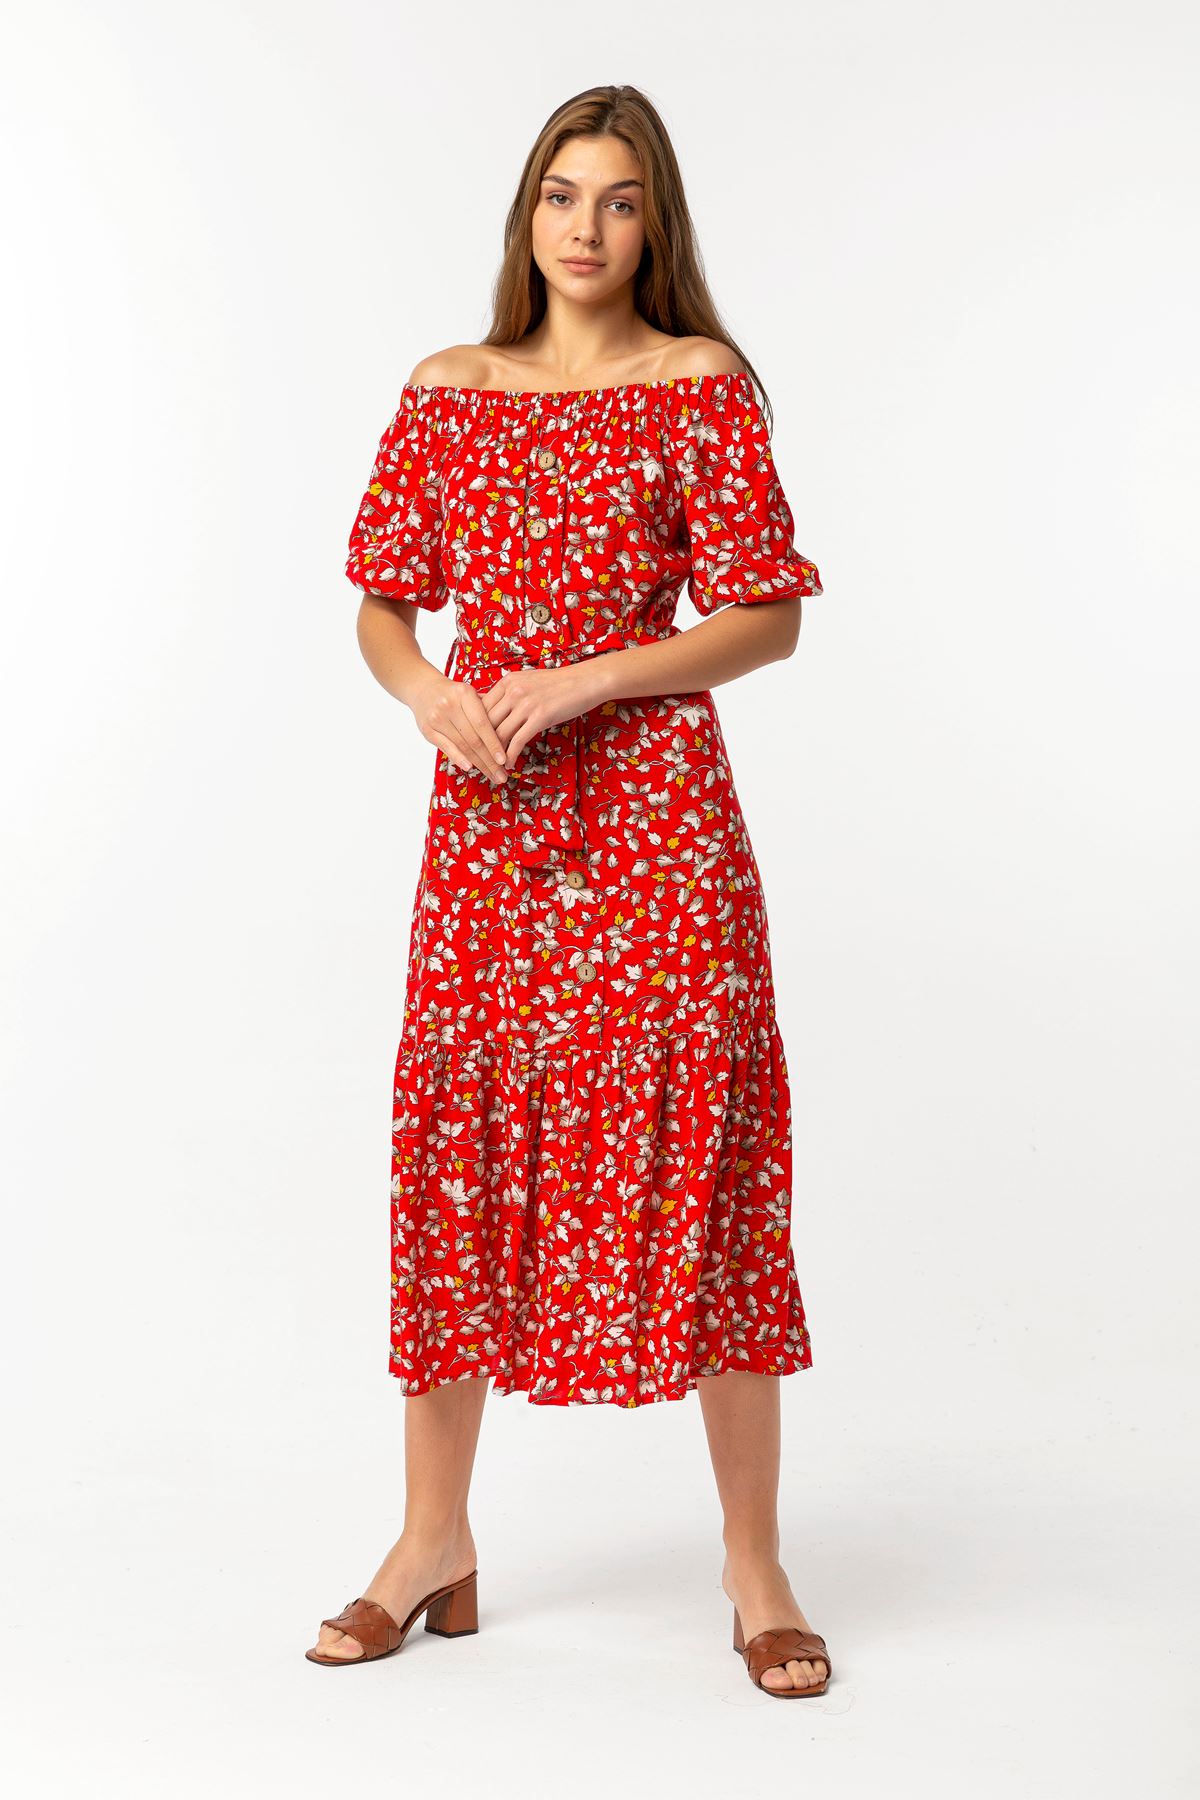 Viscose Fabric Short Sleeve Boat Neck Midi Comfy Flower Print Women Dress - Red